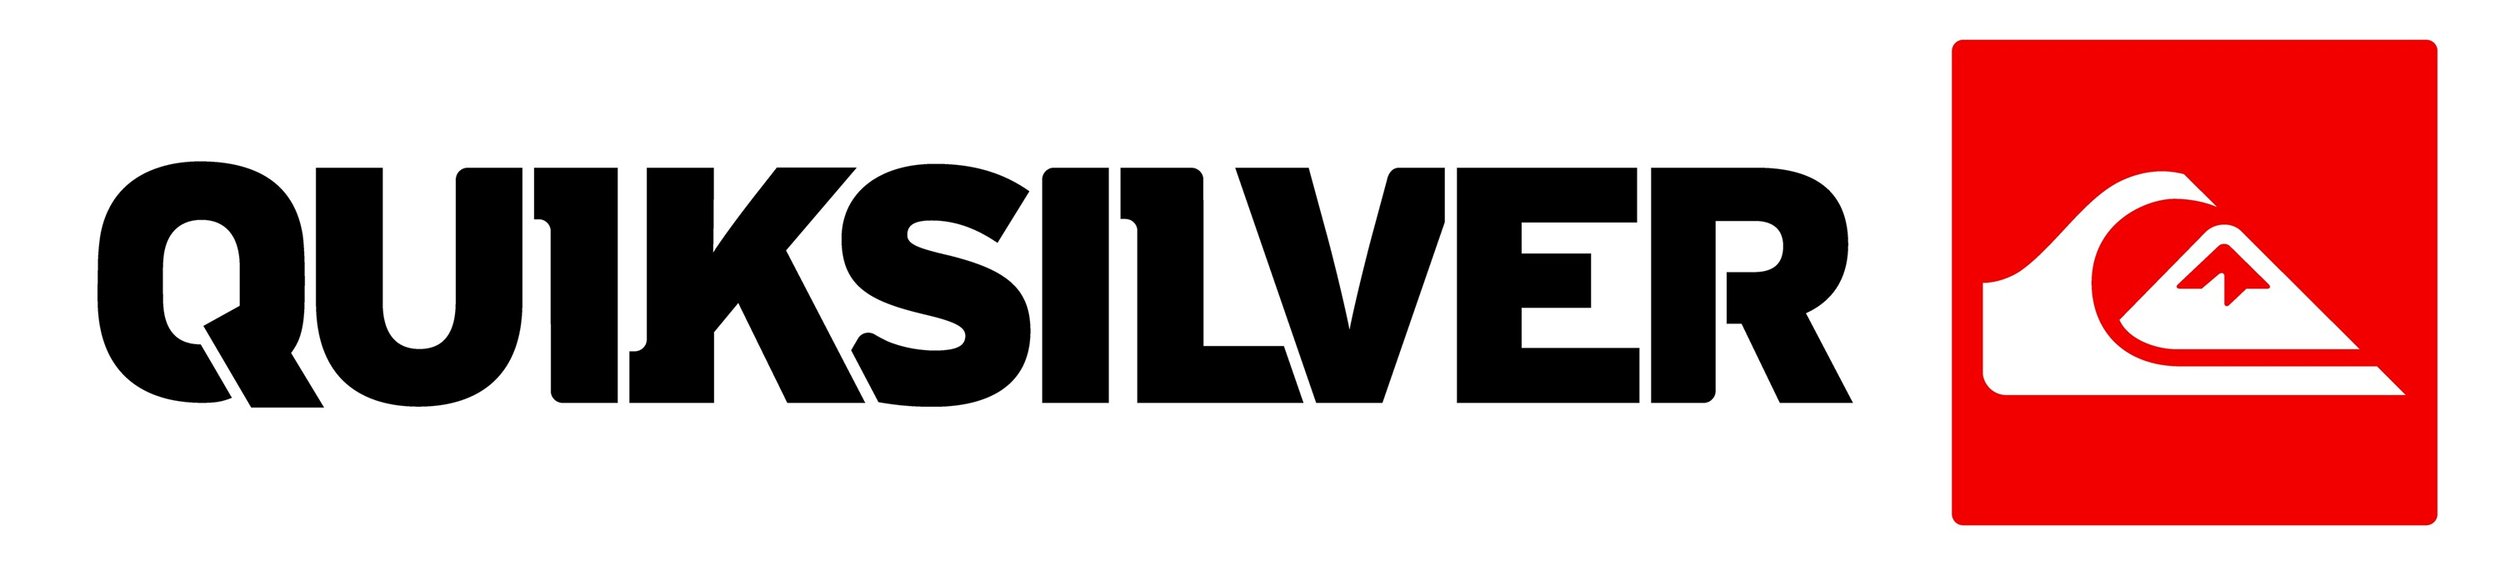 quiksilver-logo.jpg